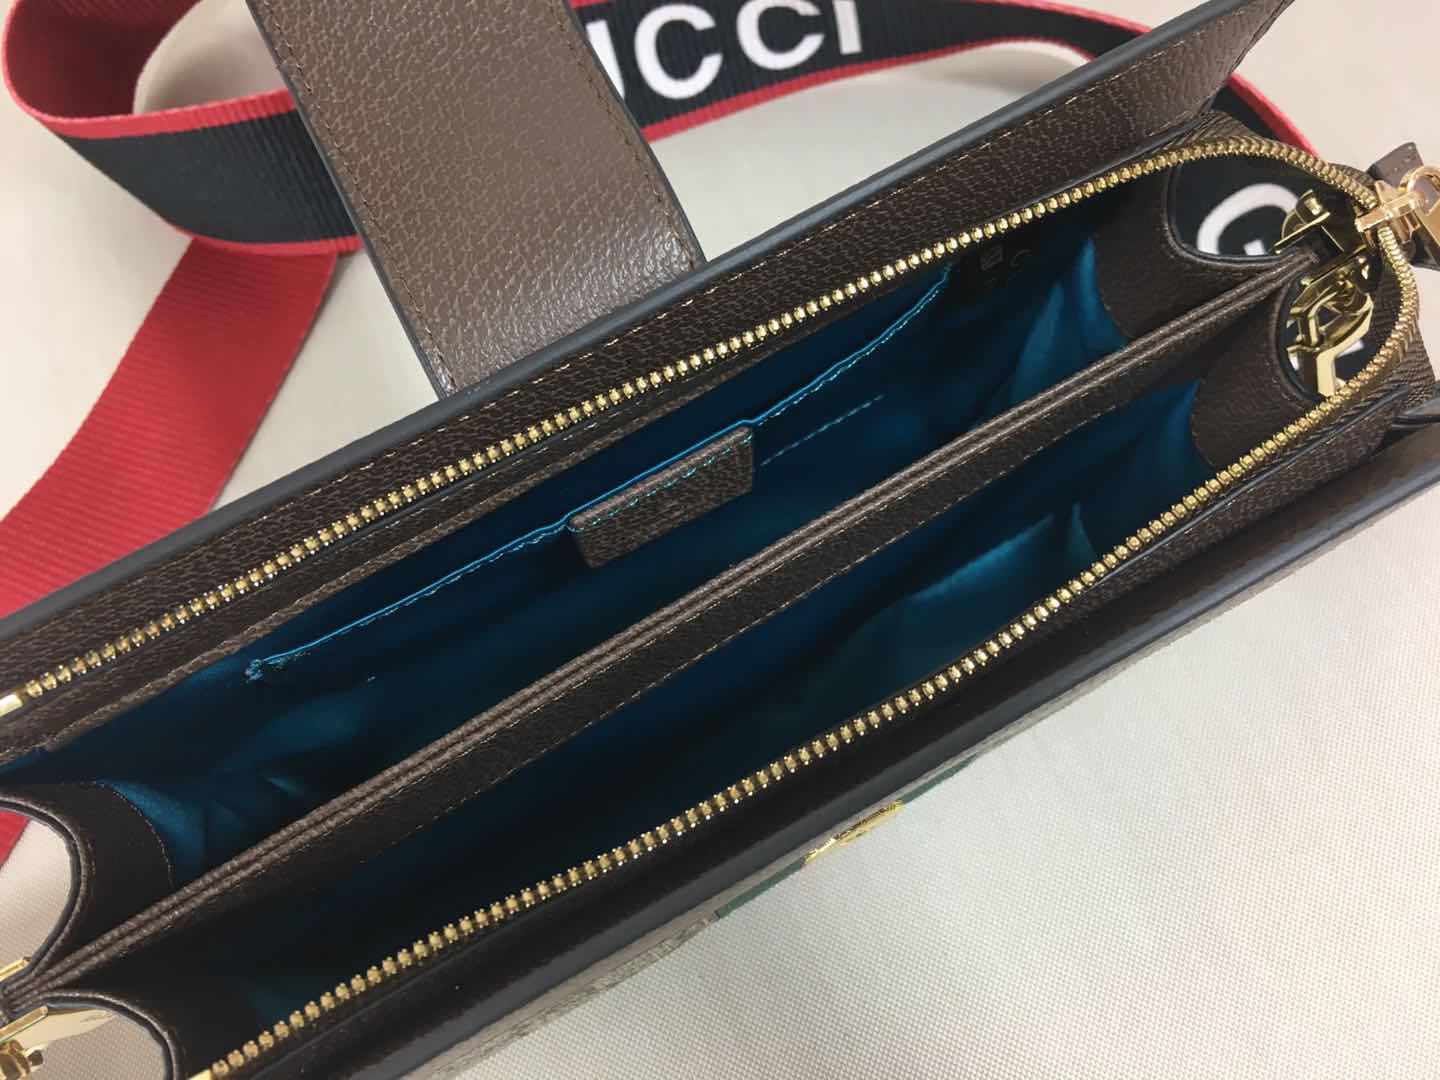 VL - Luxury Edition Bags GCI 076